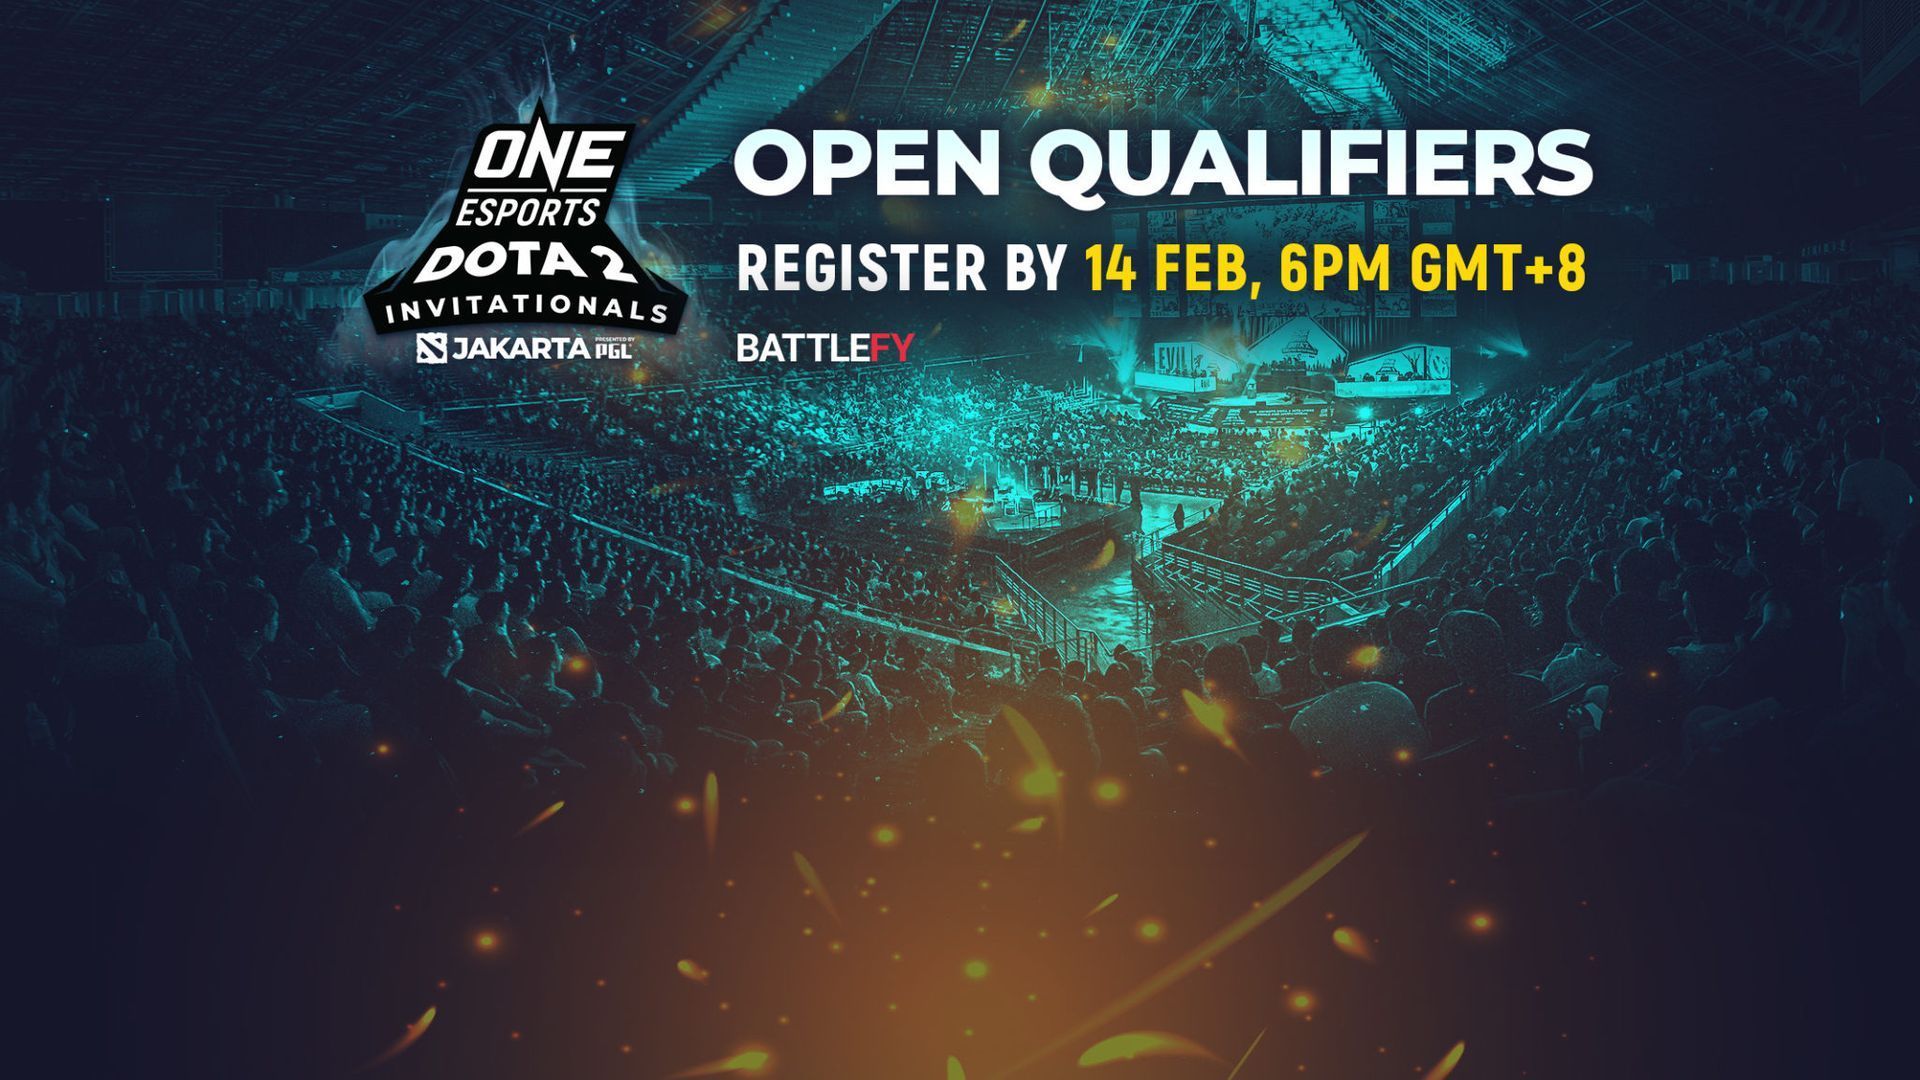 Dota open qualifiers